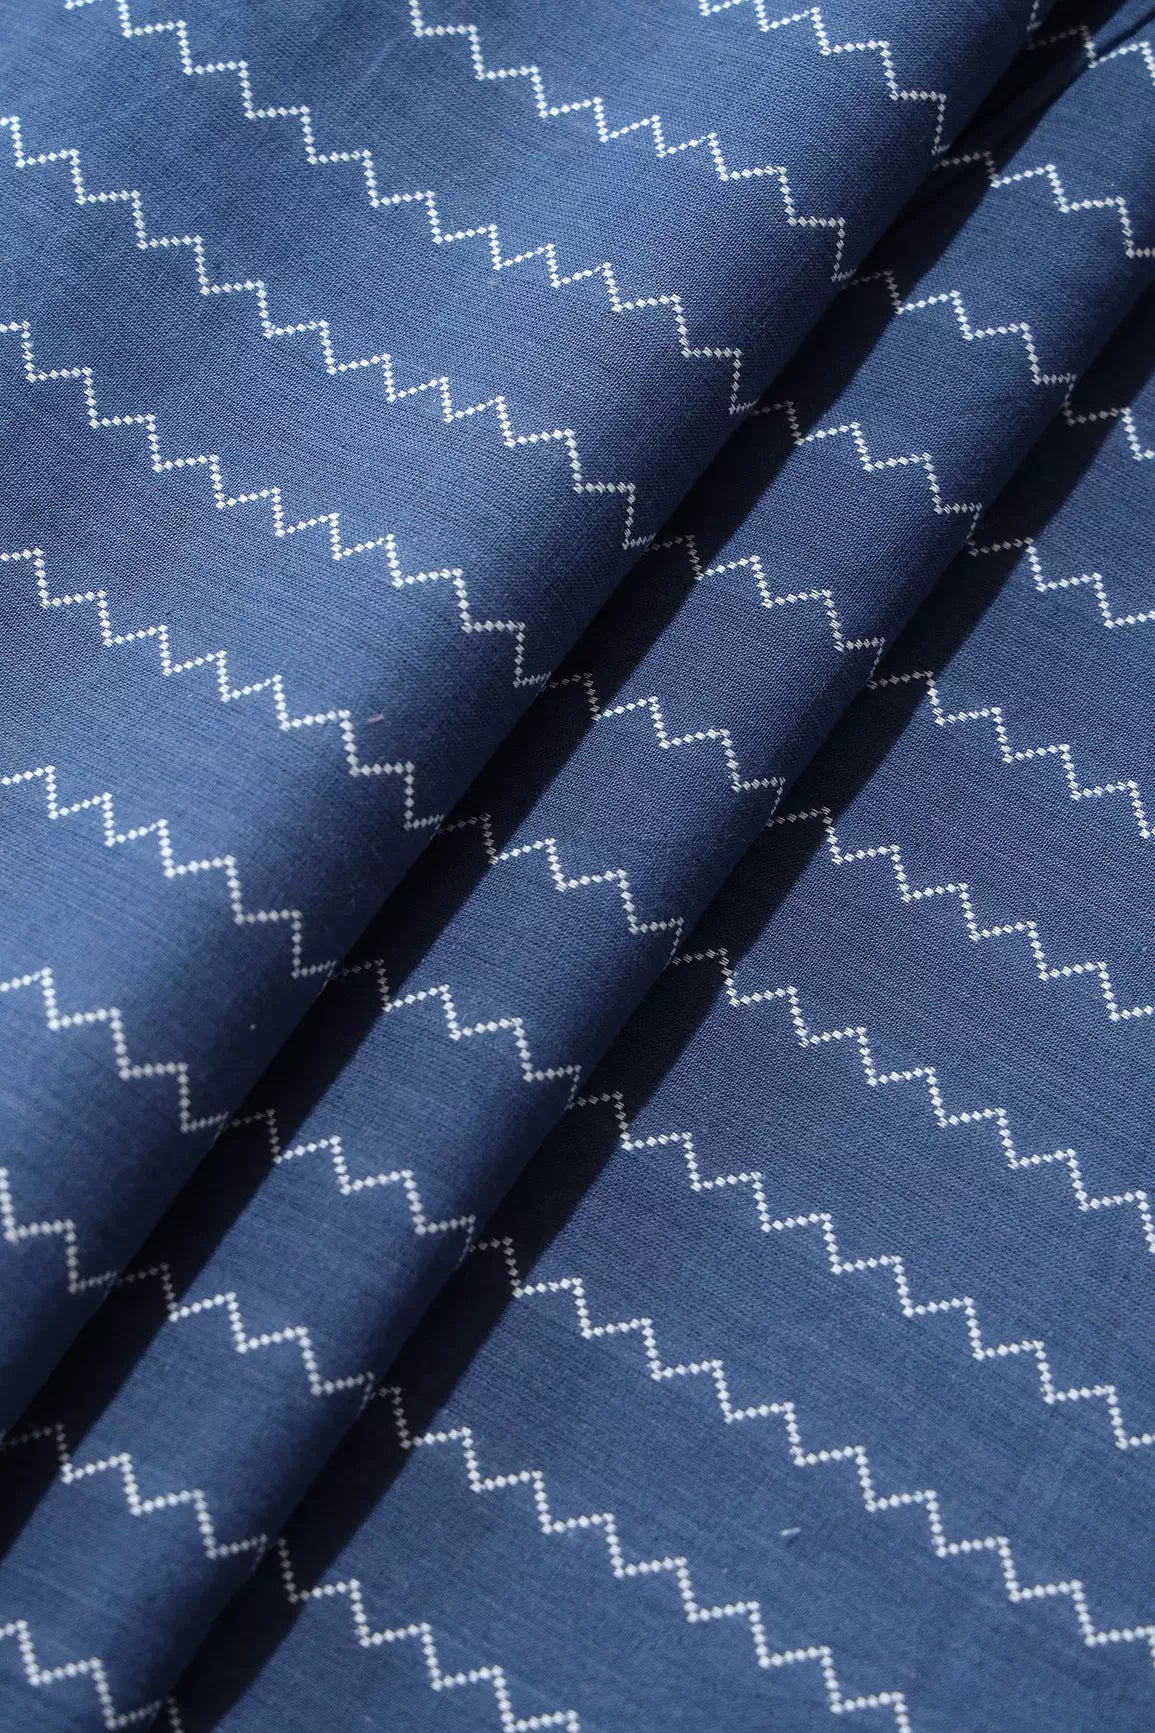 Blue And White Chevron Pattern On Handwoven Organic Cotton Fabric - doeraa